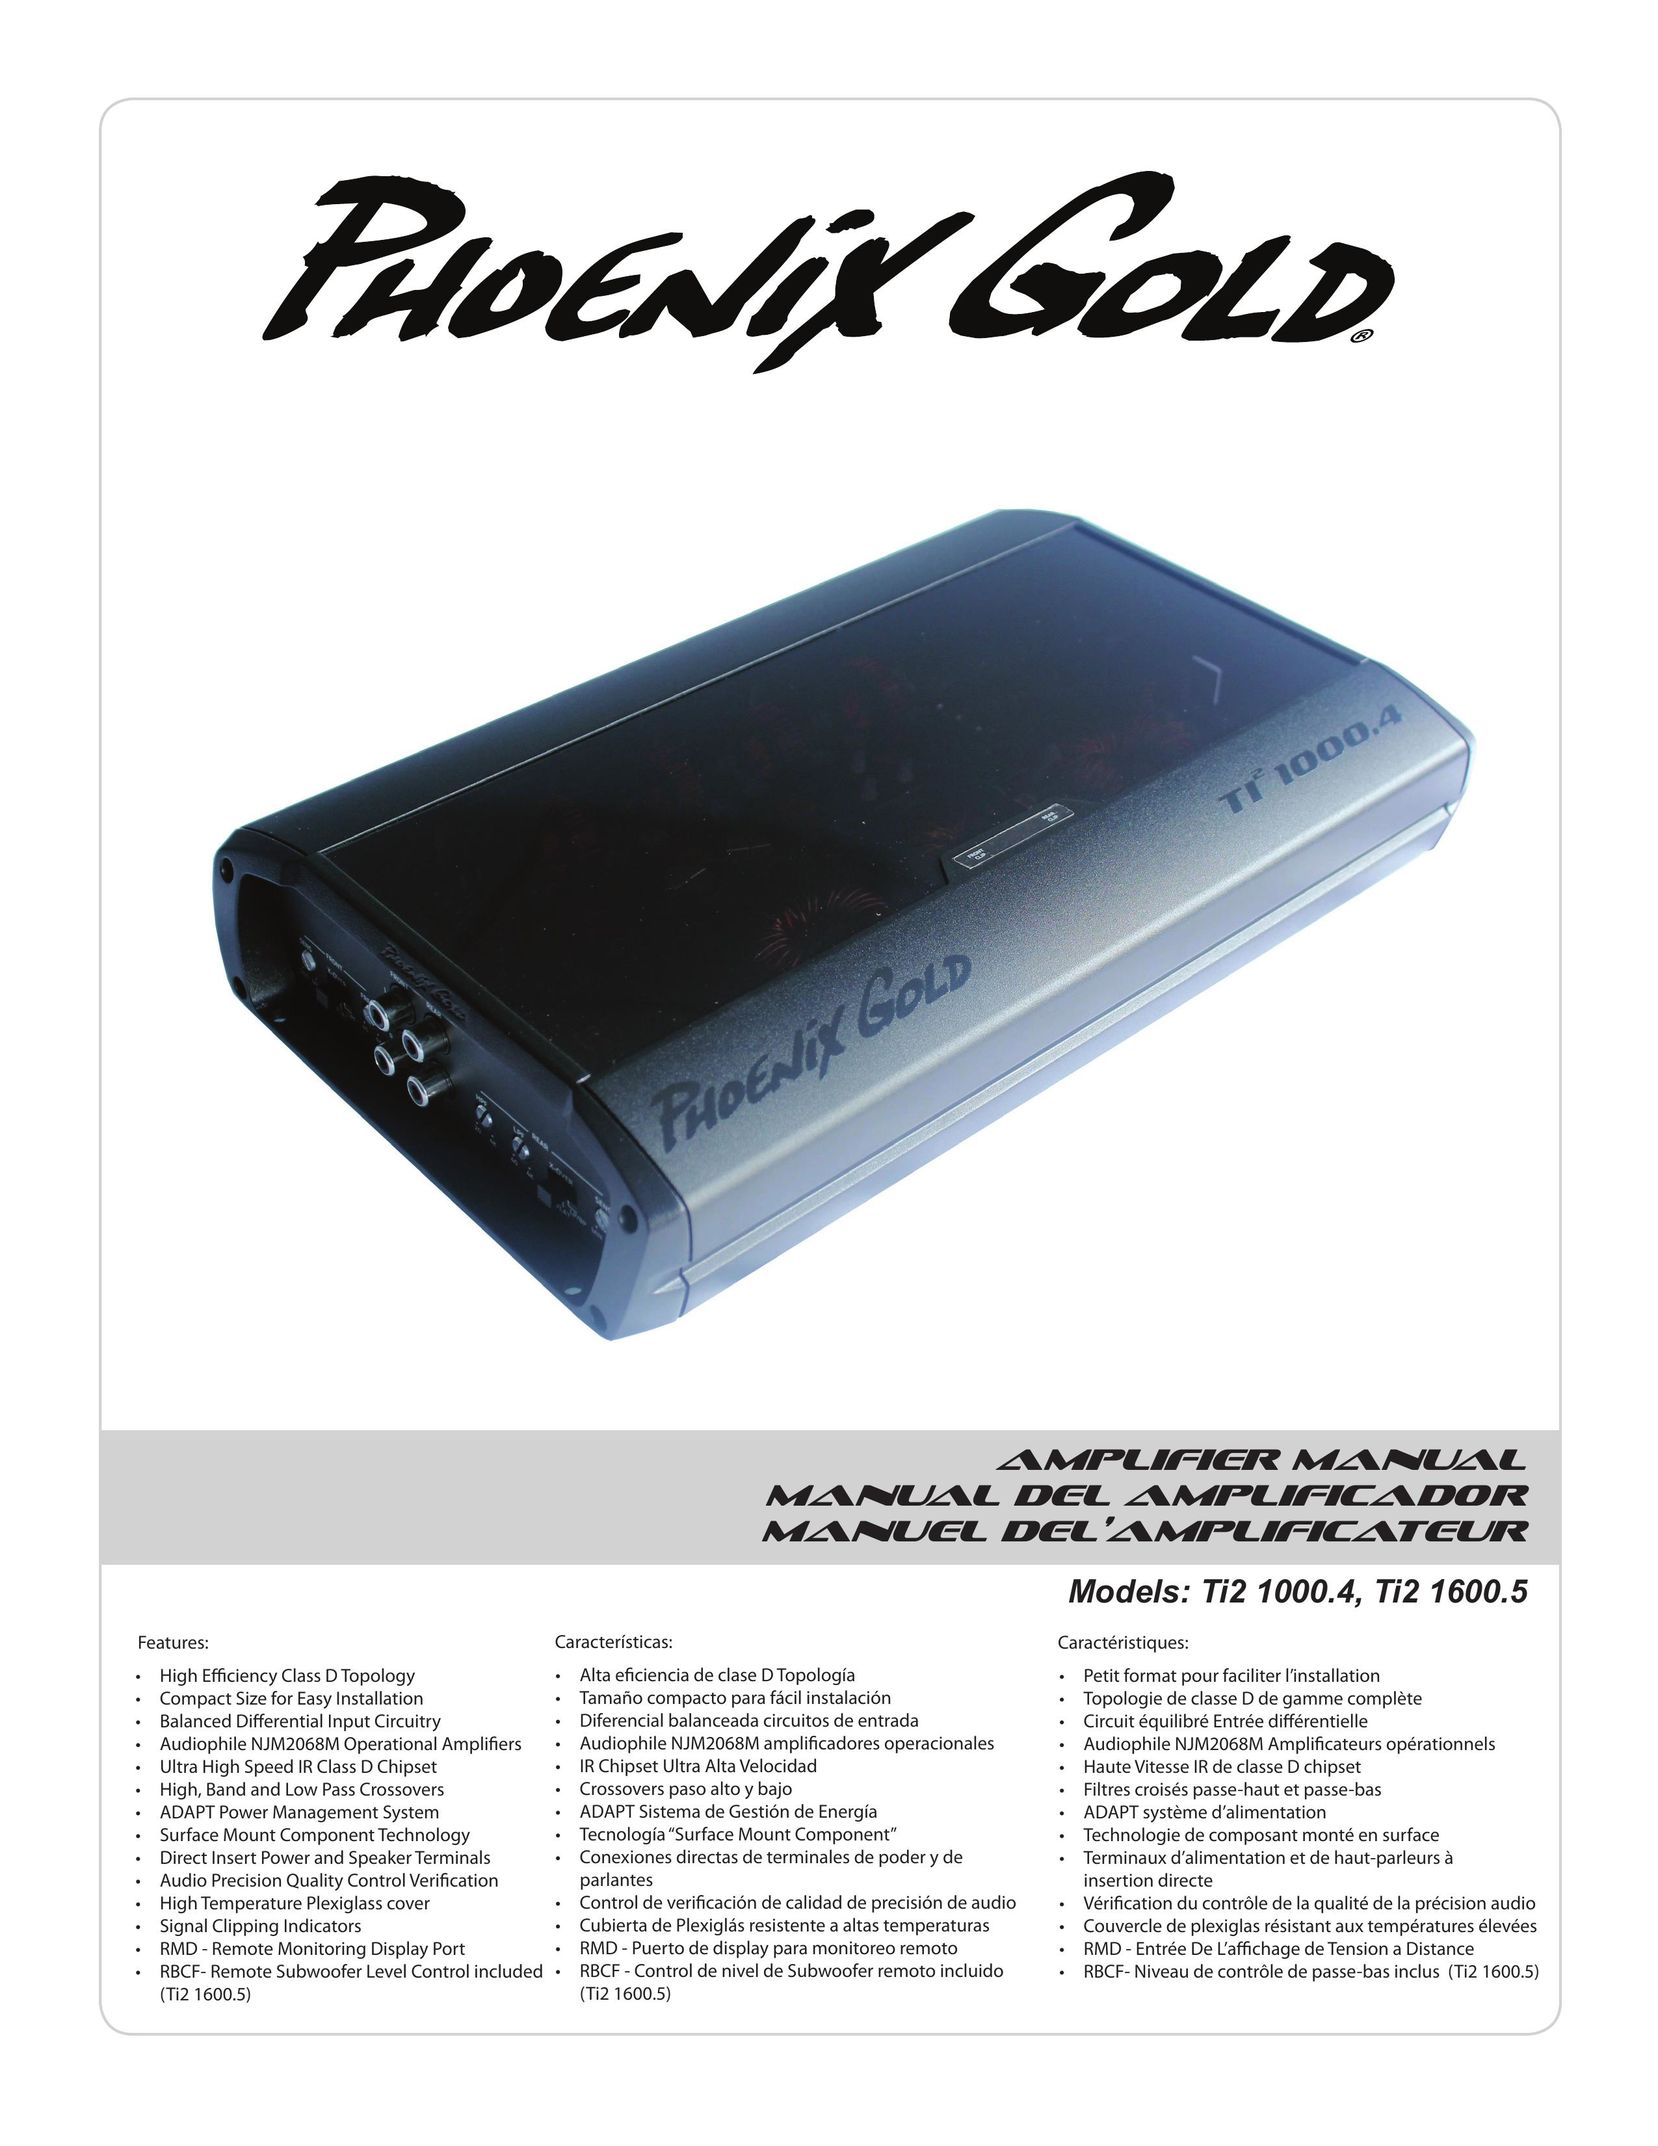 Phoenix Gold TI2 1000.4 Car Amplifier User Manual